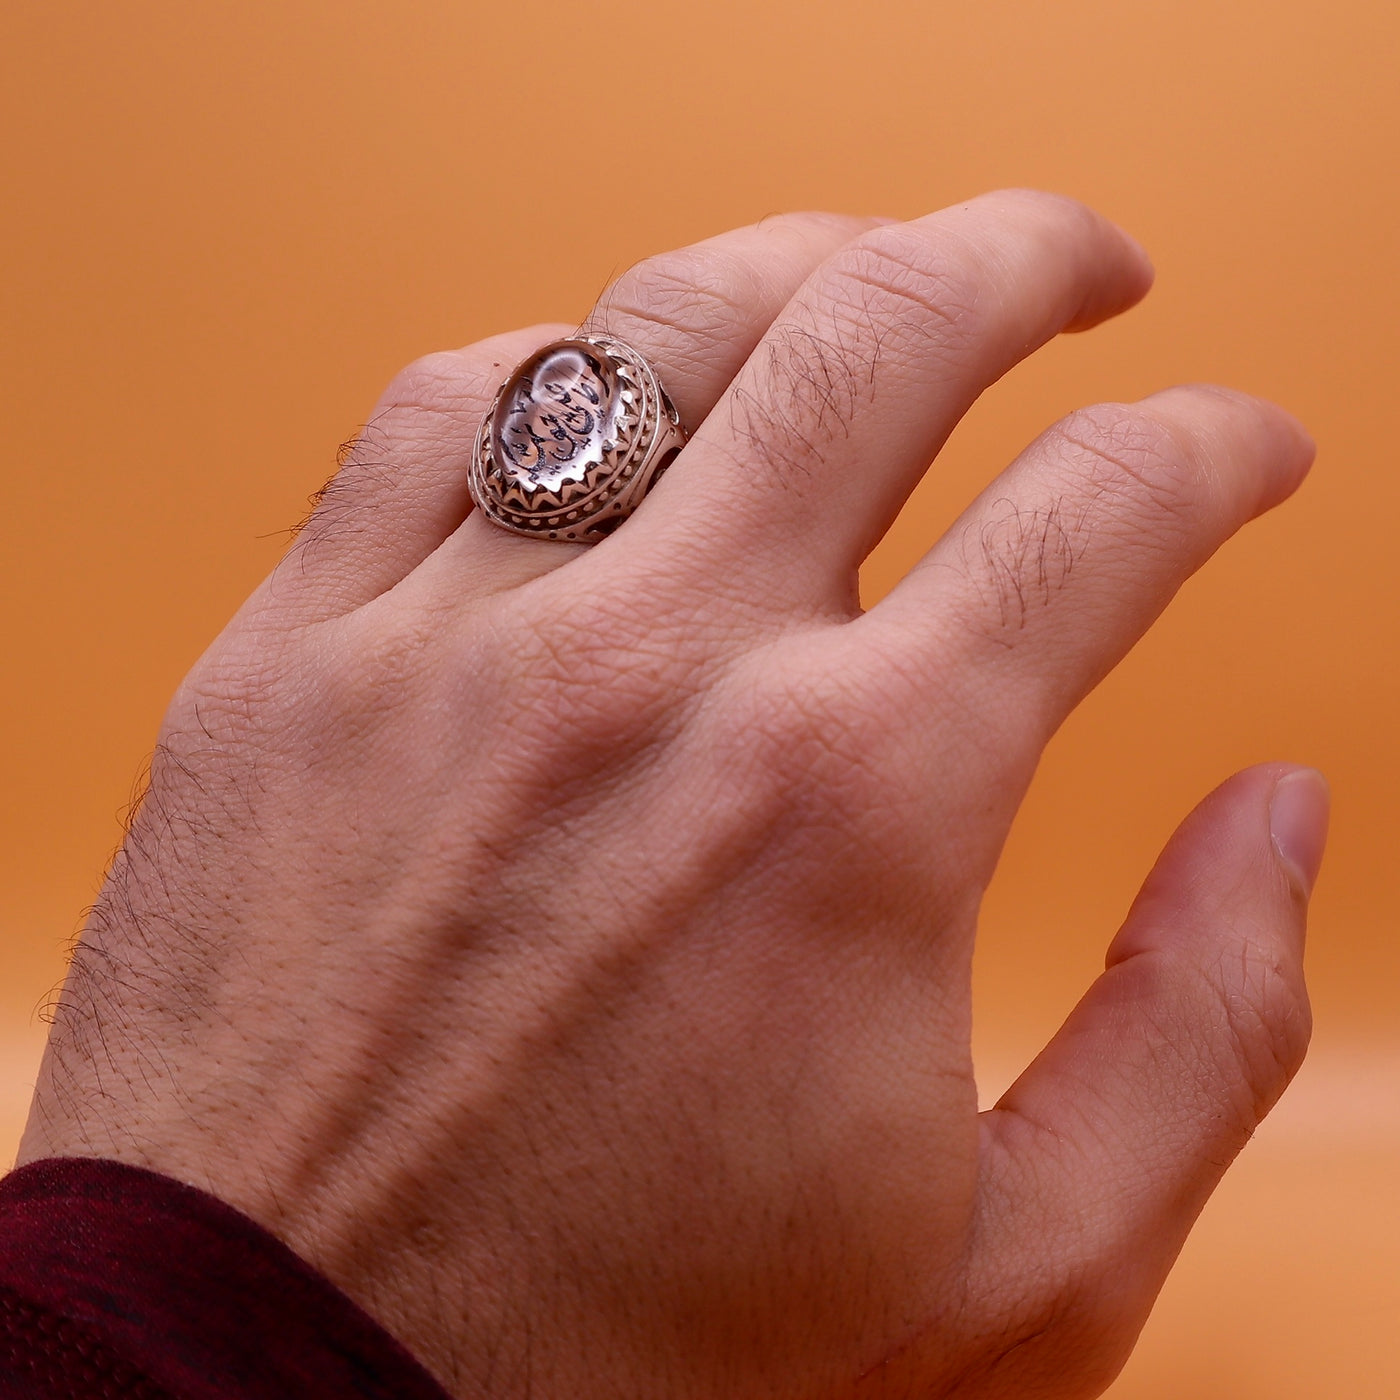 Dur e Najaf Ring Stone Ring | خاتم در النجف الاصلي | Genuine Dur E Najaf Stone Ring | Engraved Siratu Ali Haq صراط علي حق | US Size 10.5 - Al Ali Gems